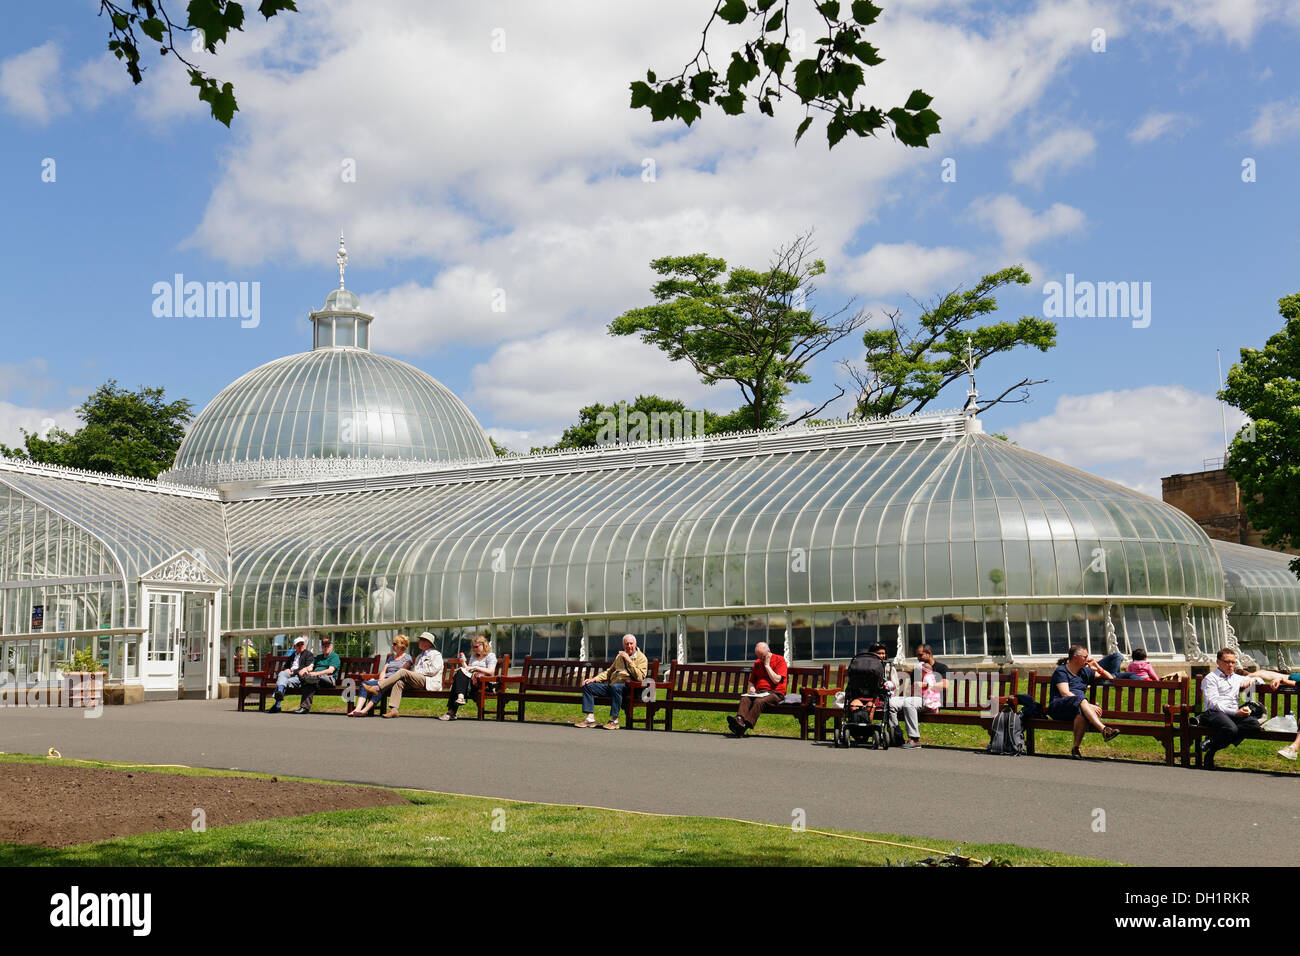 The Kibble Palace in the Botanic Gardens public park, West End of Glasgow, Scotland, UK Stock Photo